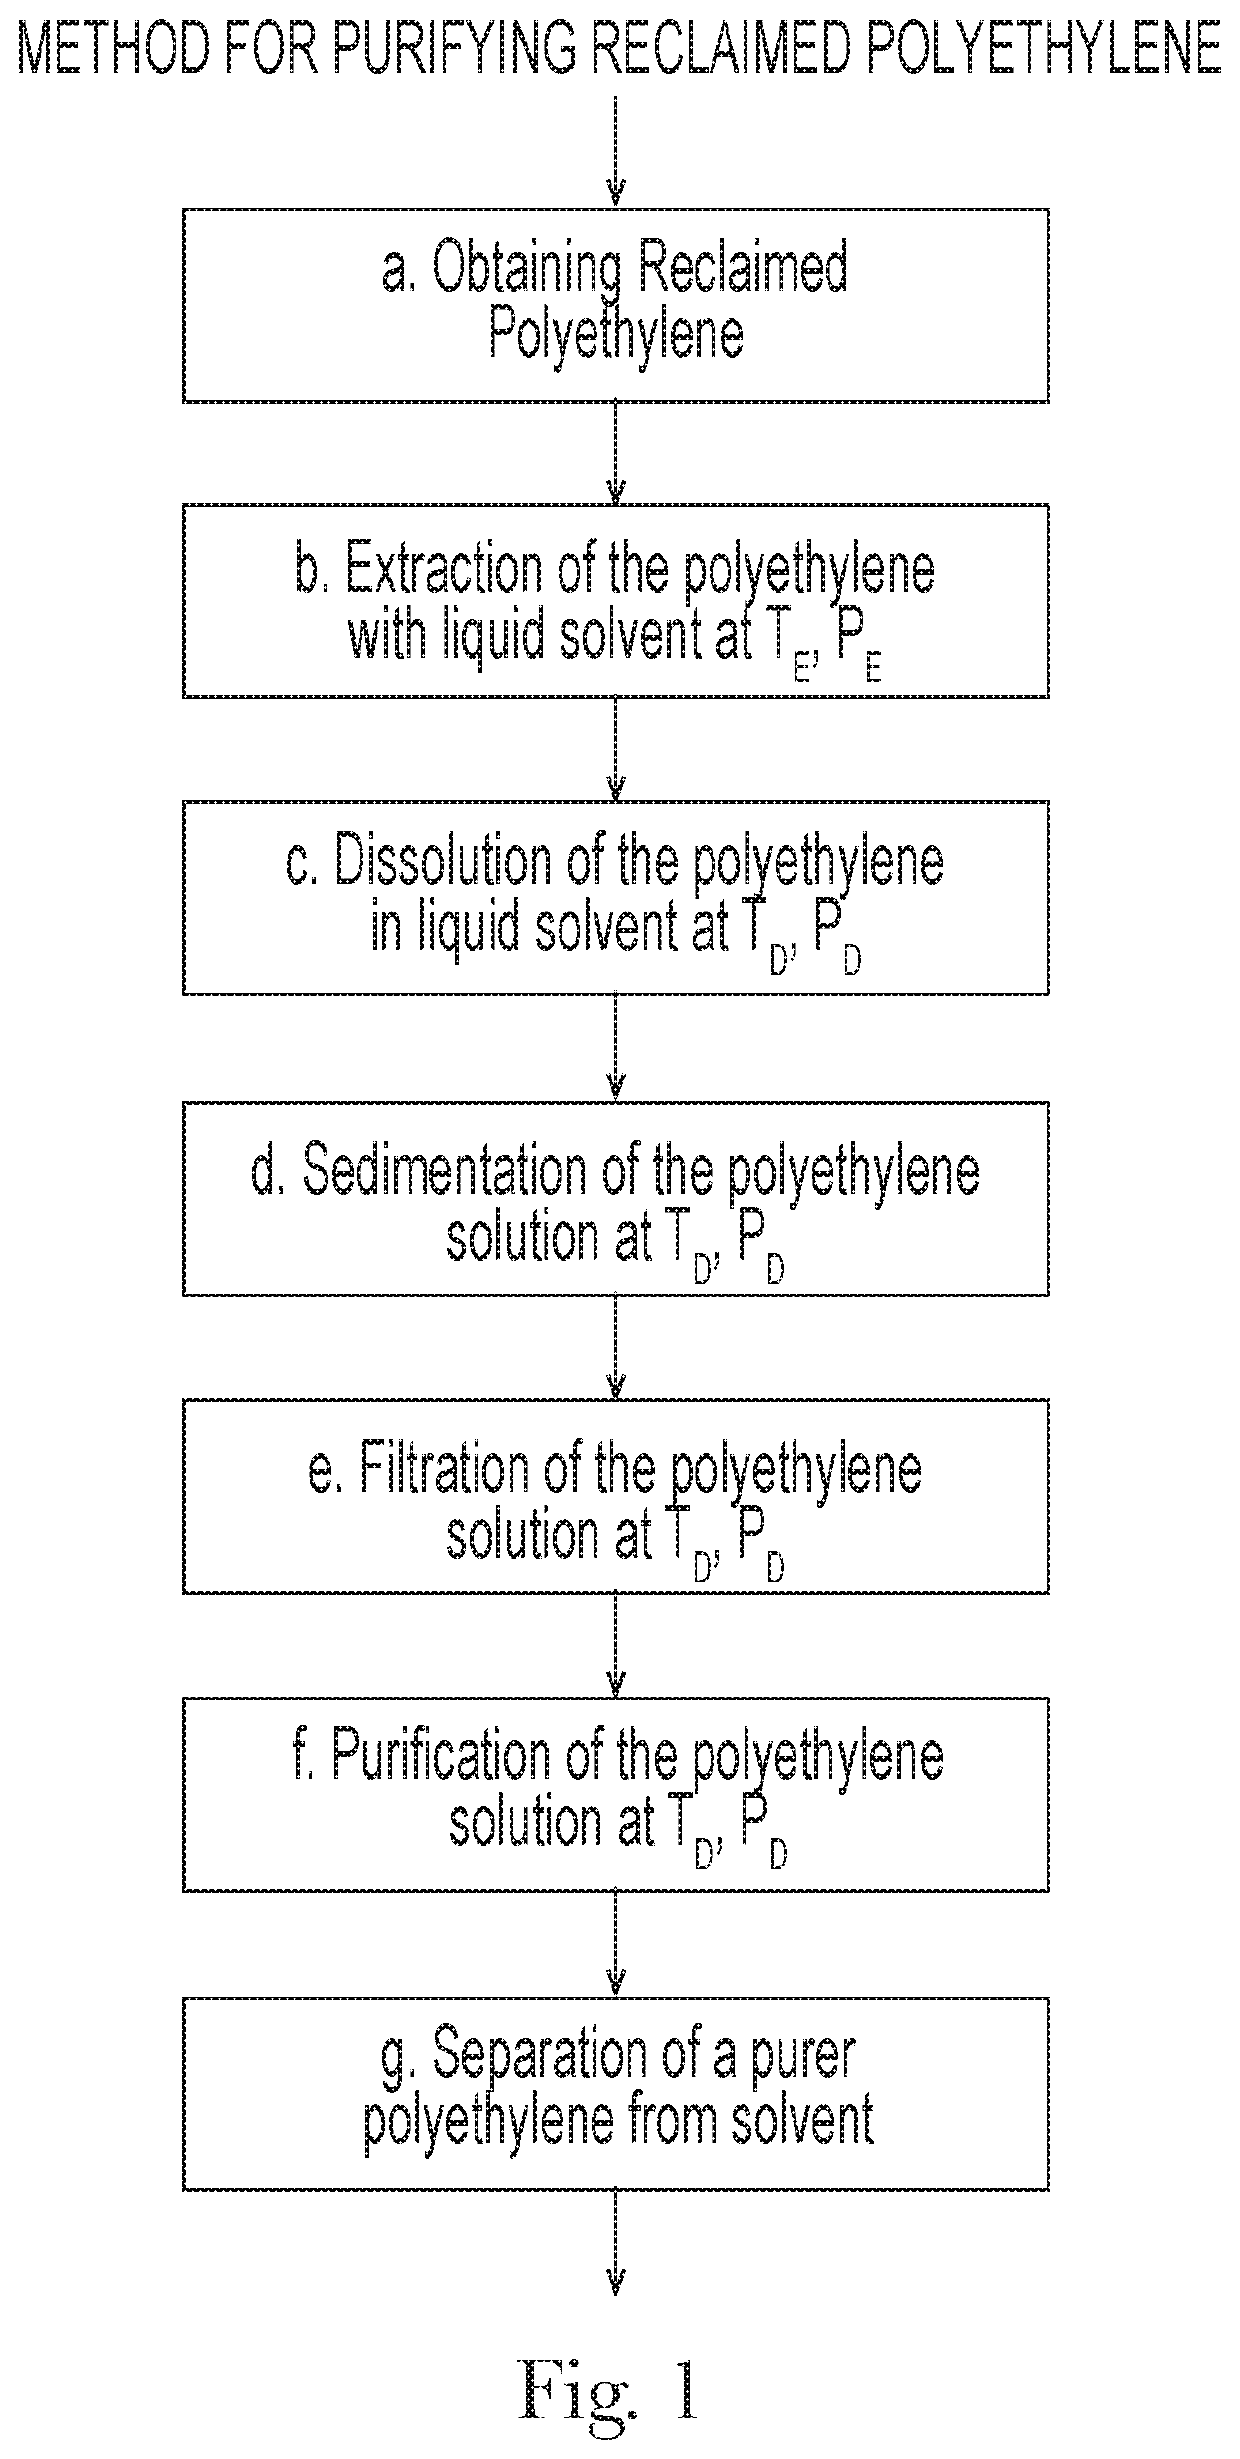 Method for purifying reclaimed polyethylene